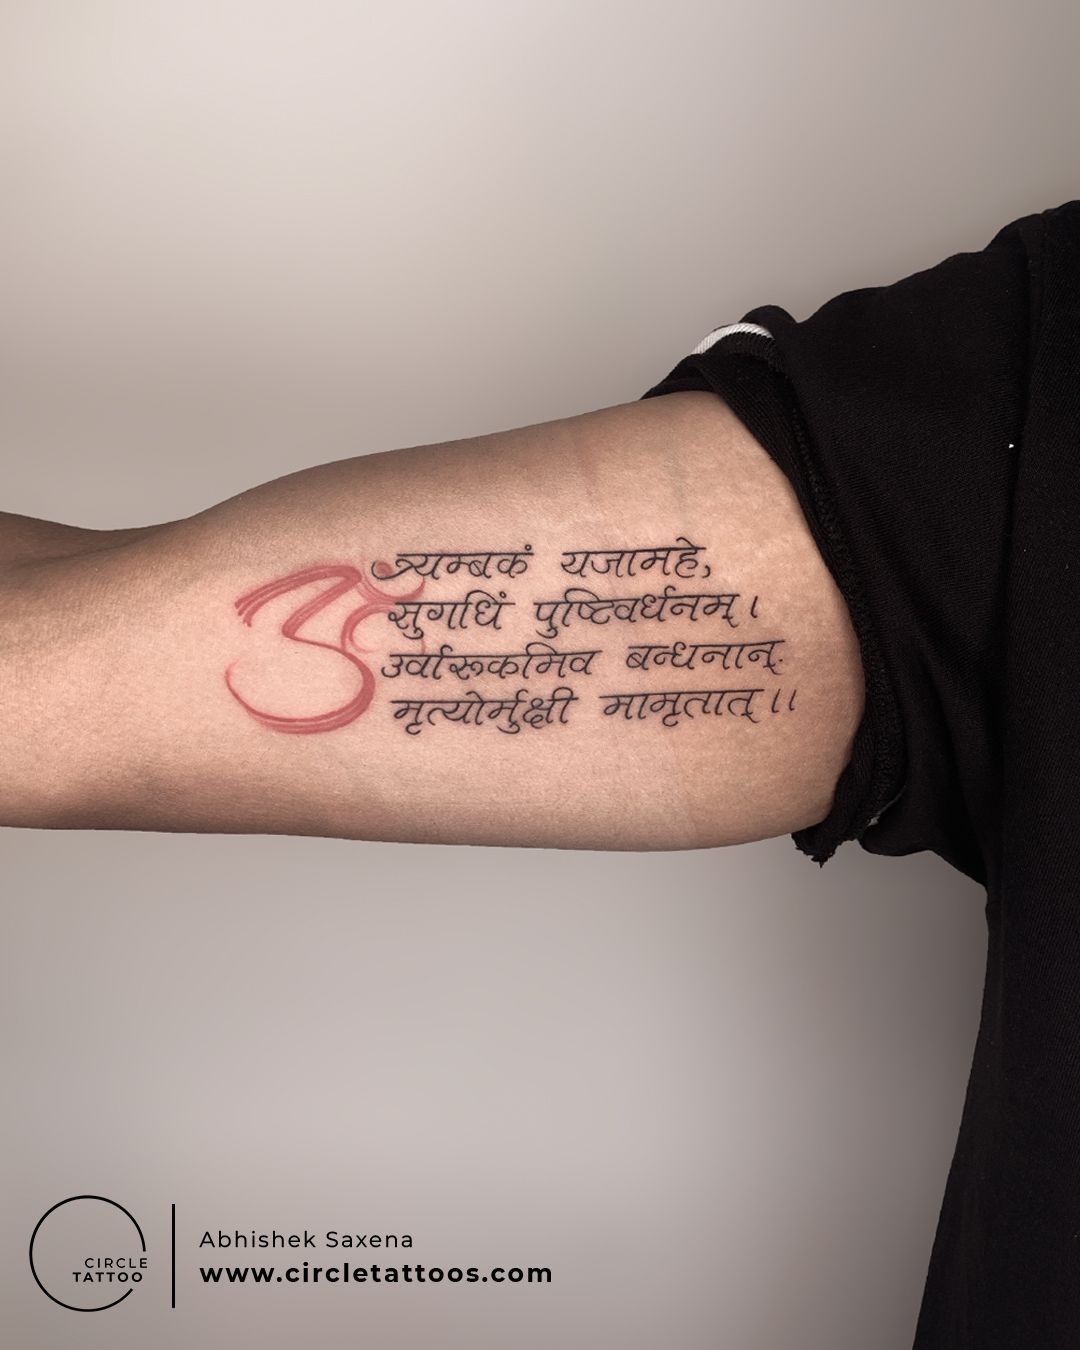 Karma Tattoo - Soolam tattoos done by Karthik (karma tattoo ink & piercing)  ph - 9894566562. | Facebook